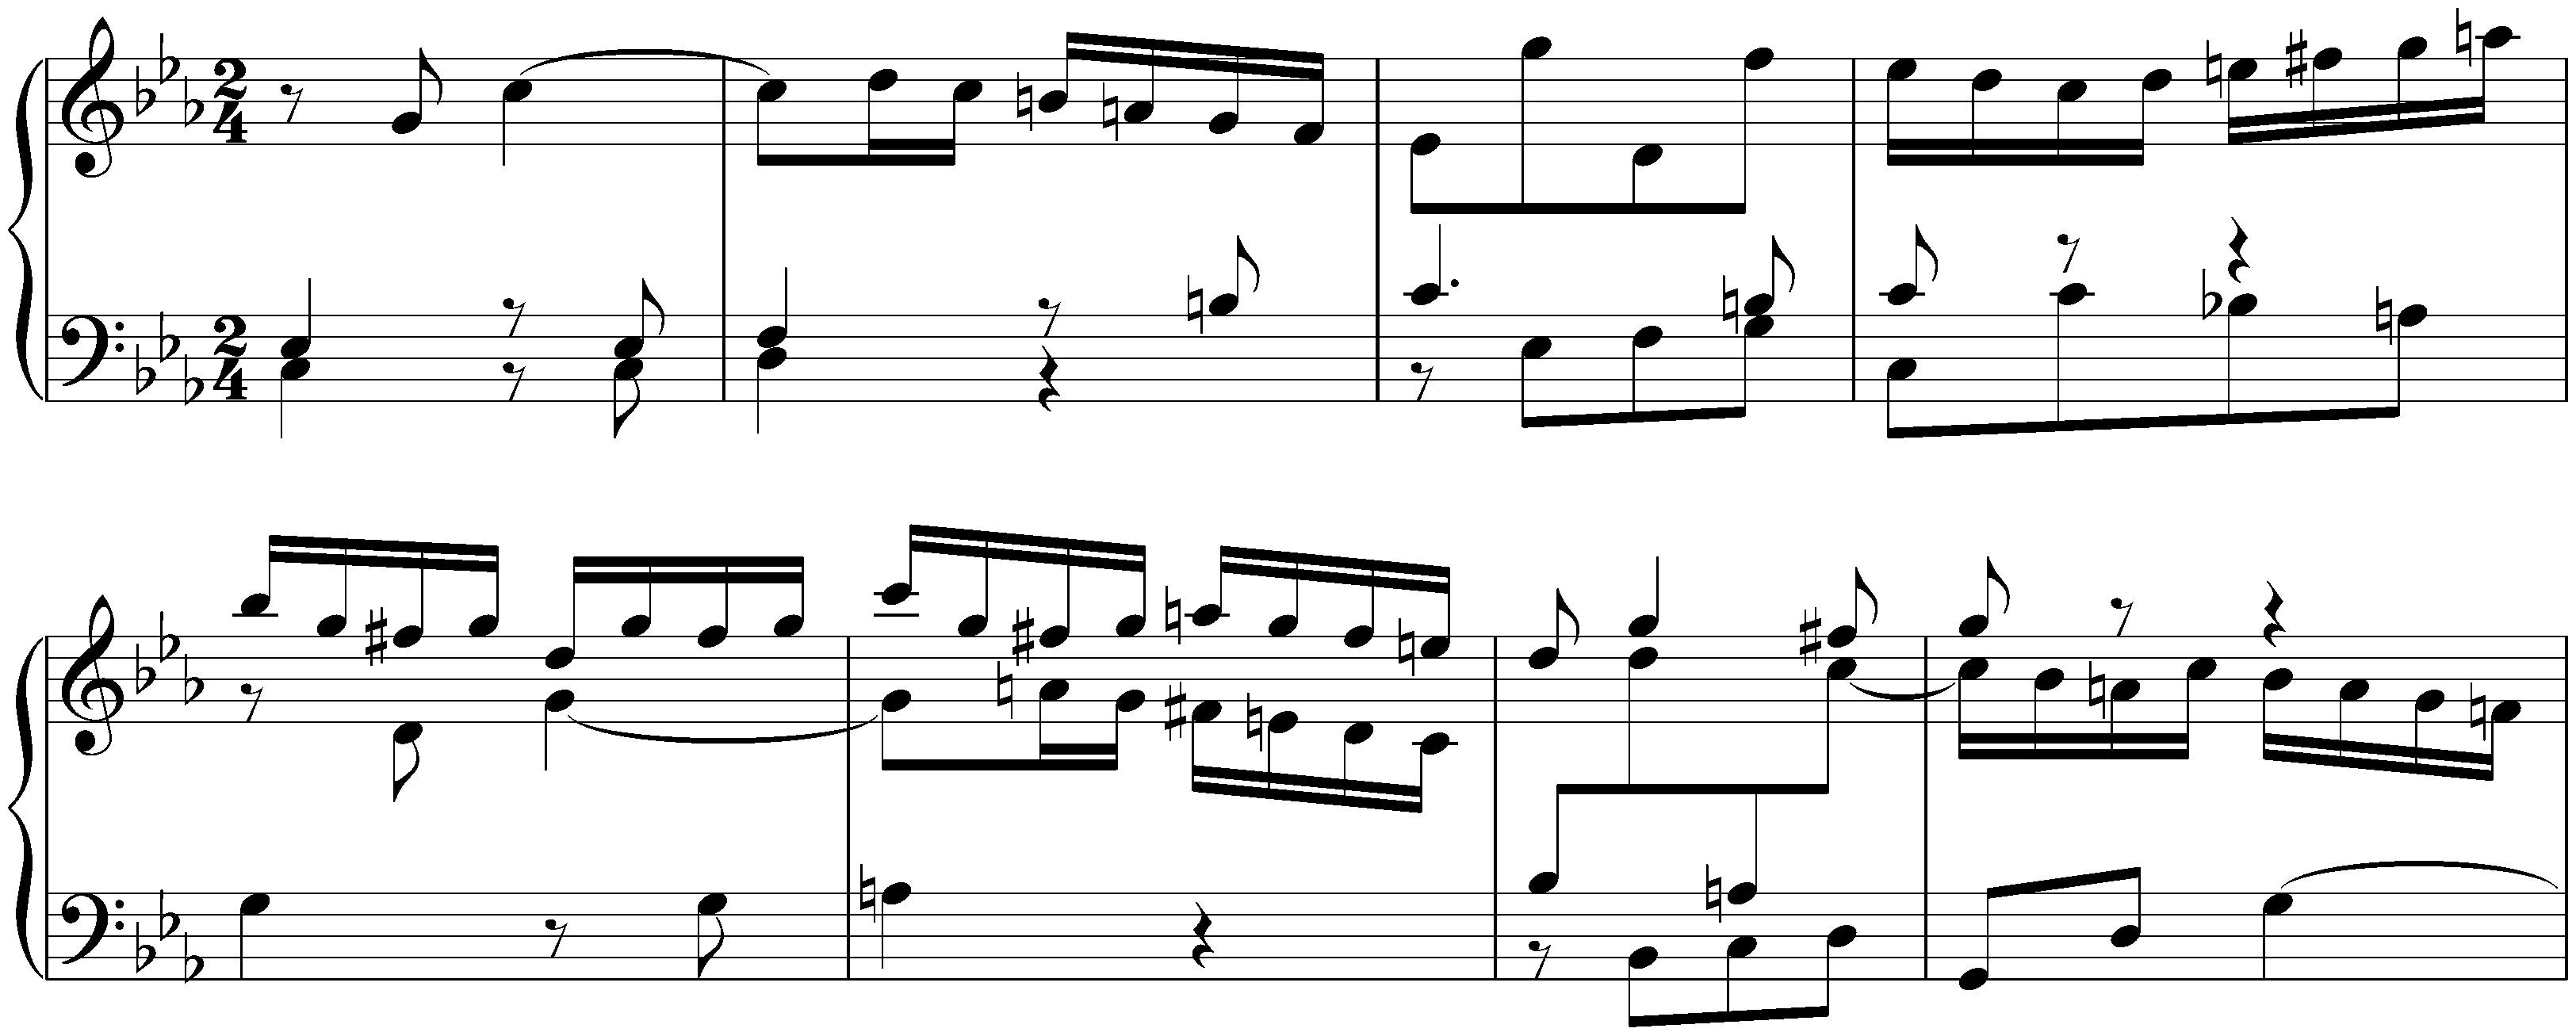 Partita no. 2 in C minor, BWV 826; 6. Capriccio